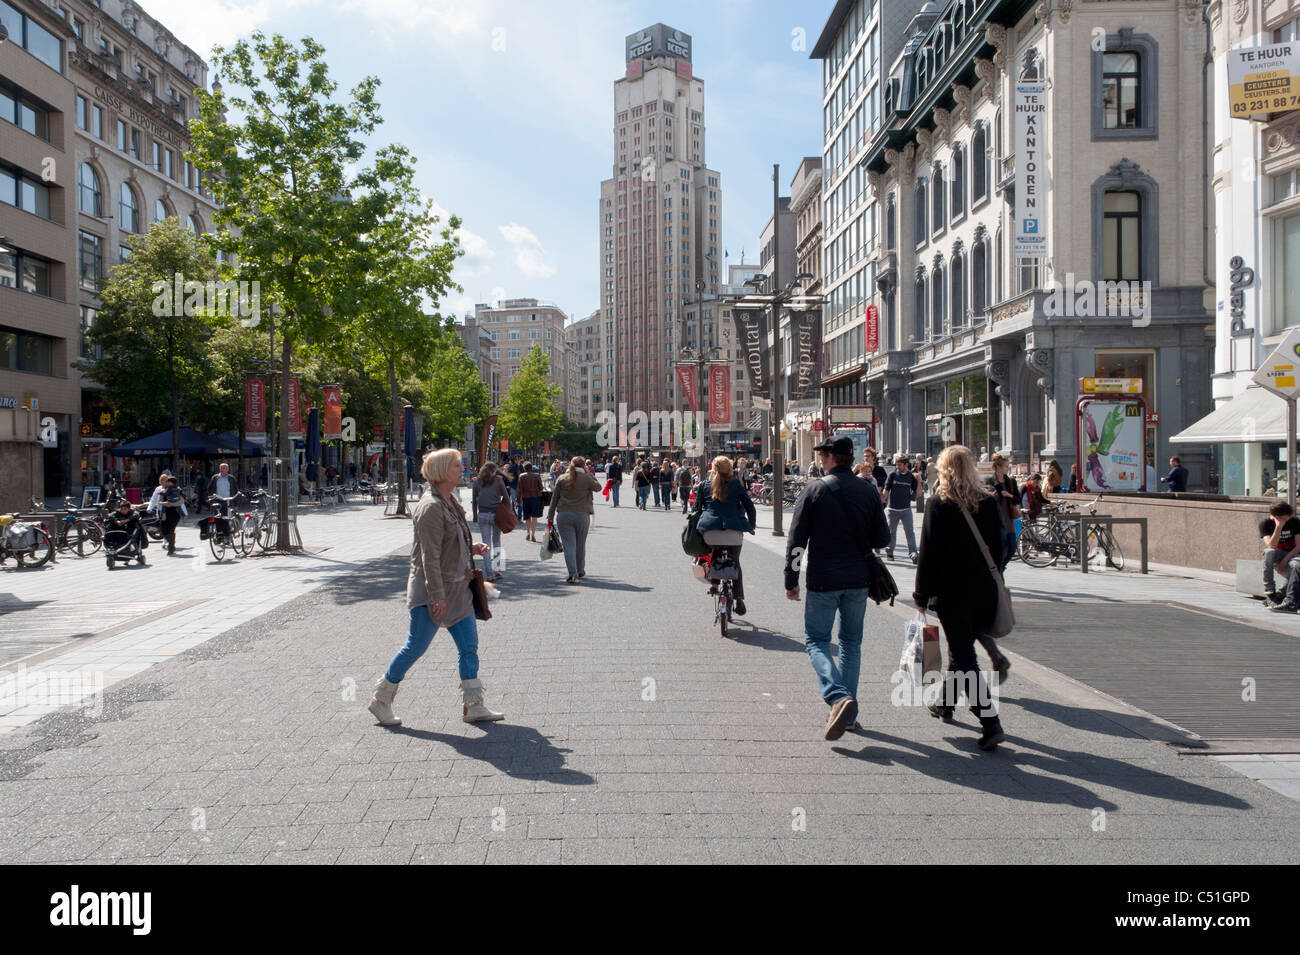 A sunlit busy street scene in Antwerp, Belgium. Stock Photo